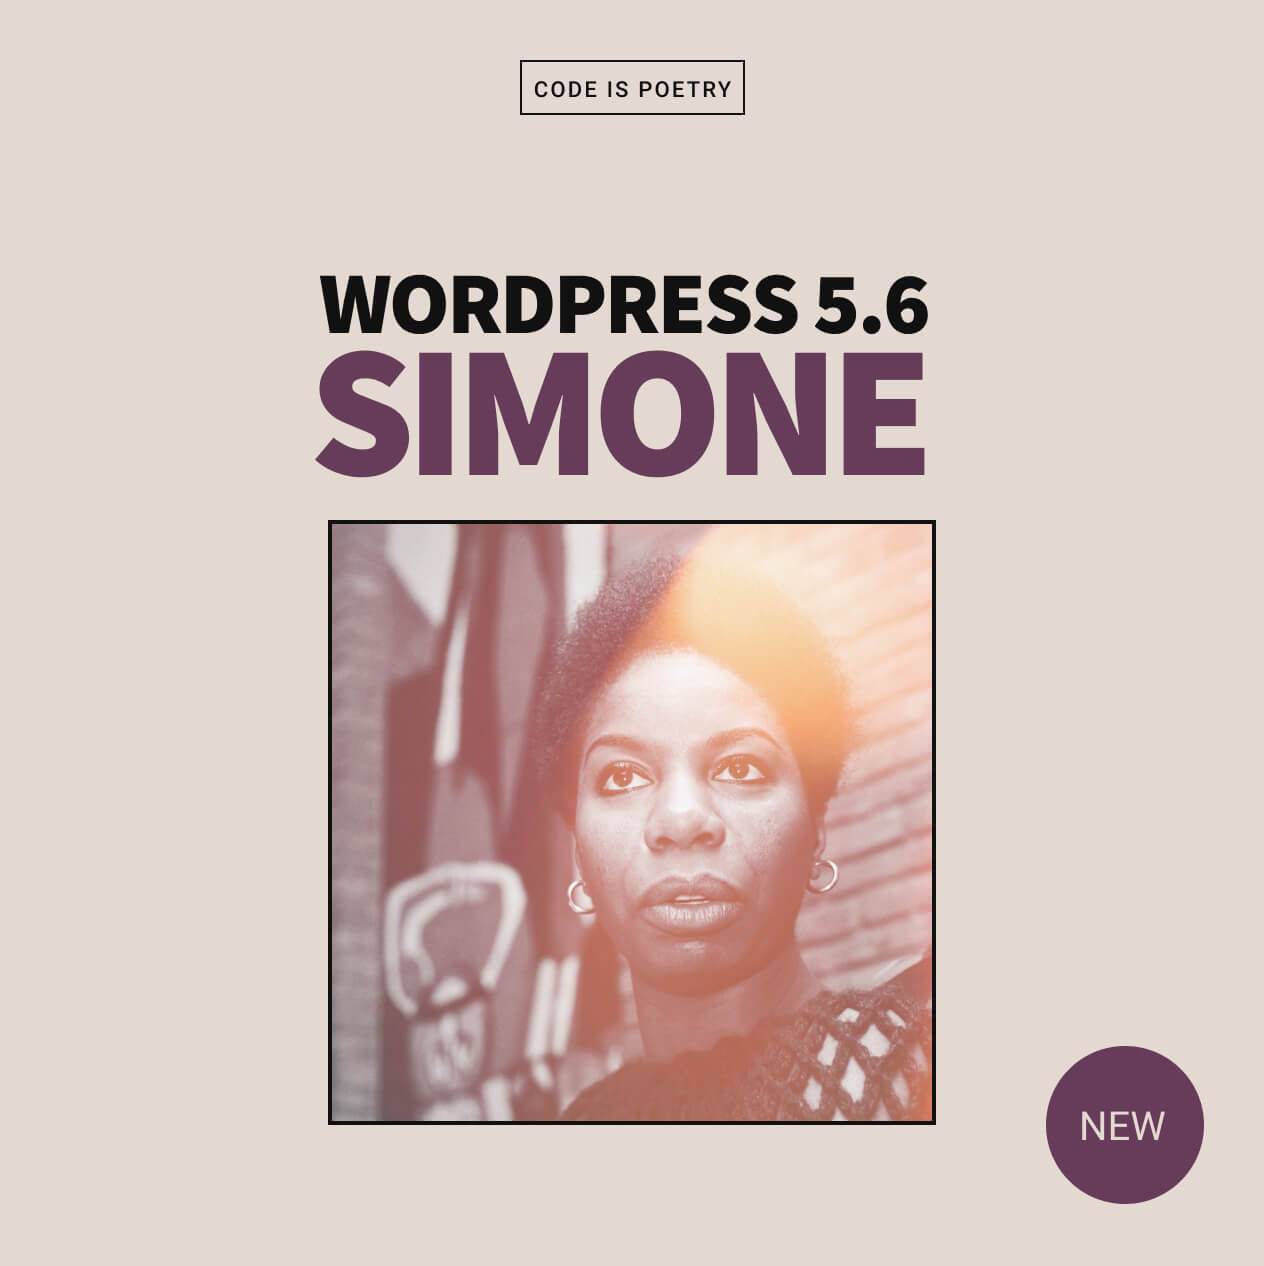 WordPress 5.6 Photos of Simone and Nina Simone